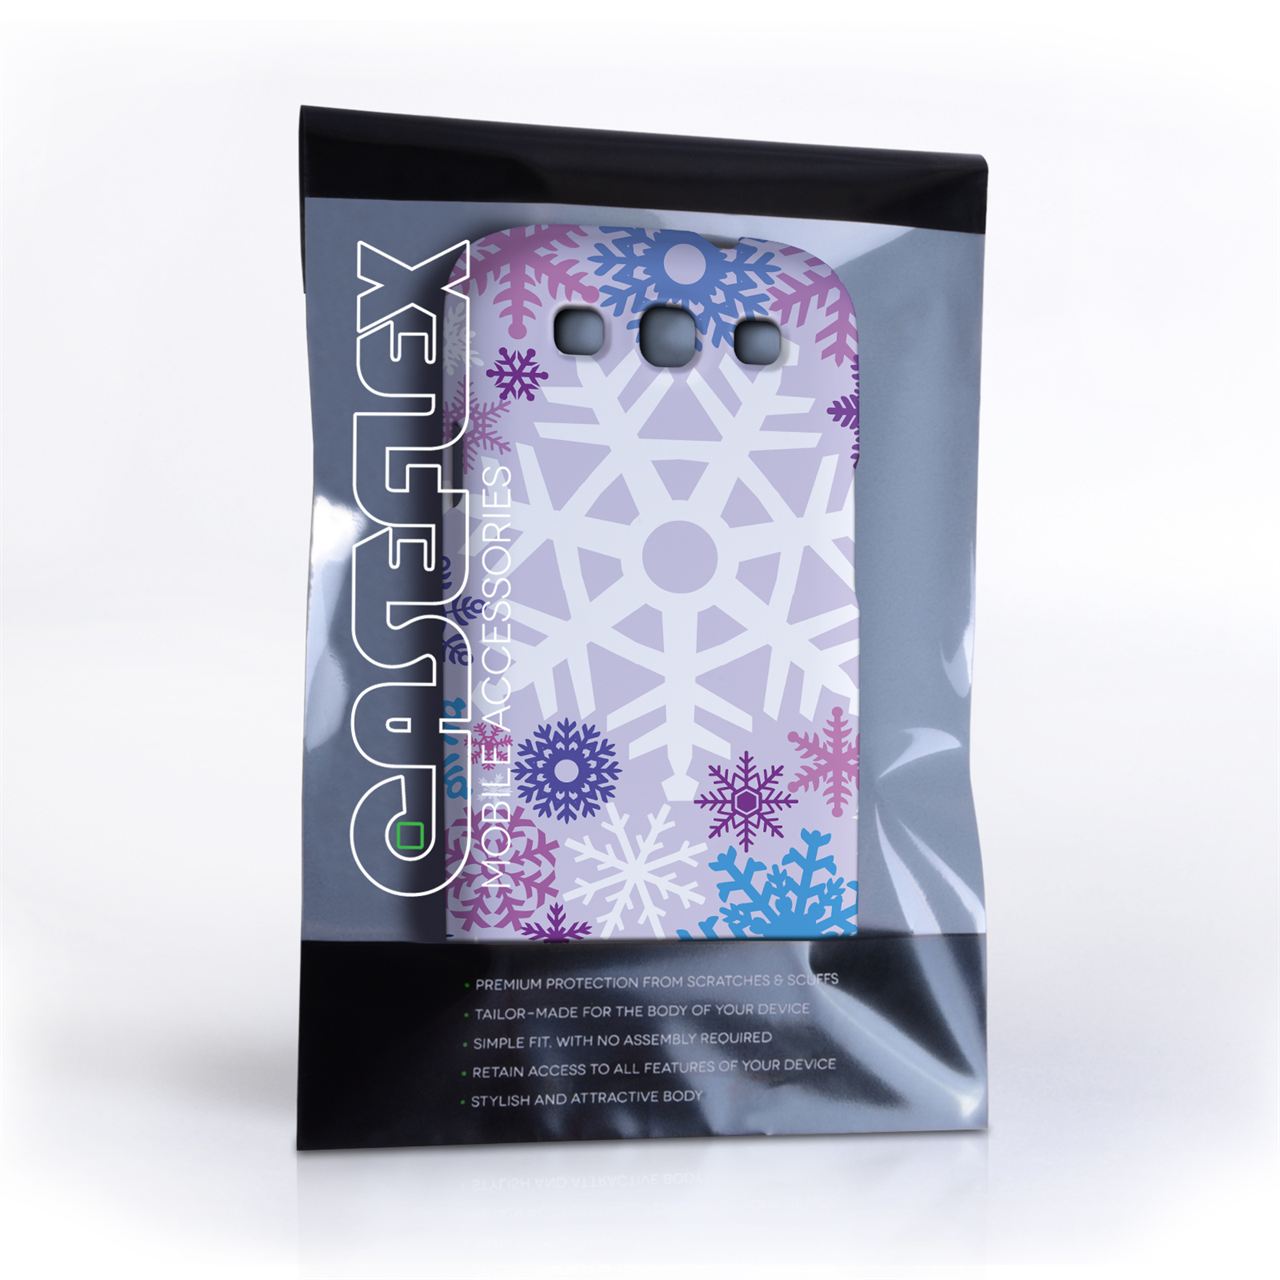 Caseflex Samsung Galaxy S3 Winter Christmas Snowflake Cover – Purple